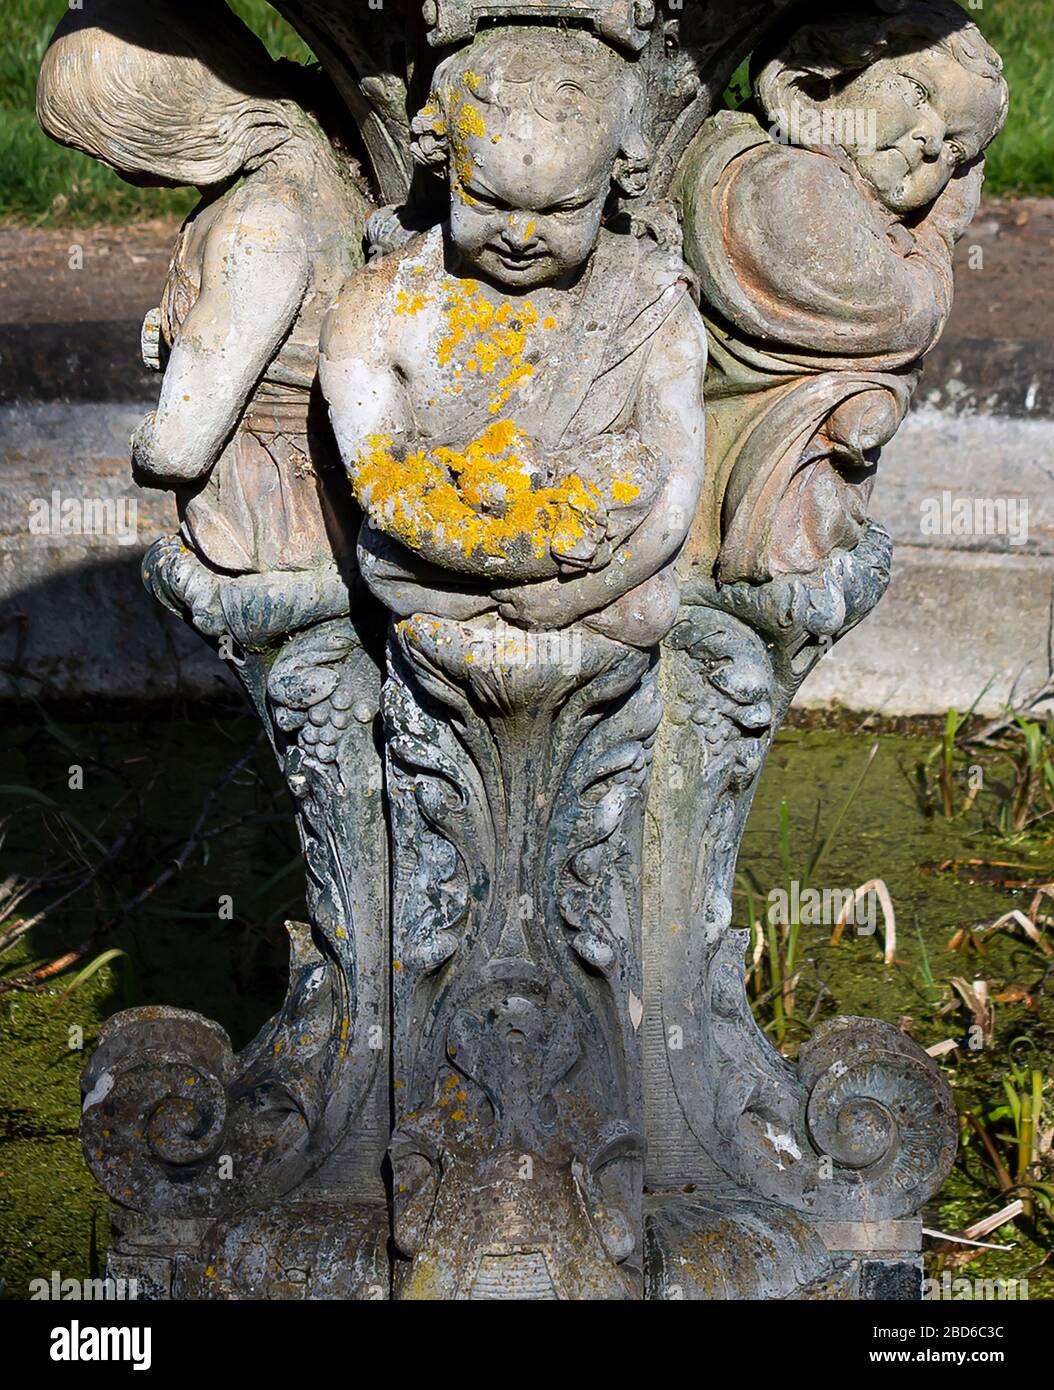 Close up of cherub statue on fountain Stock Photo